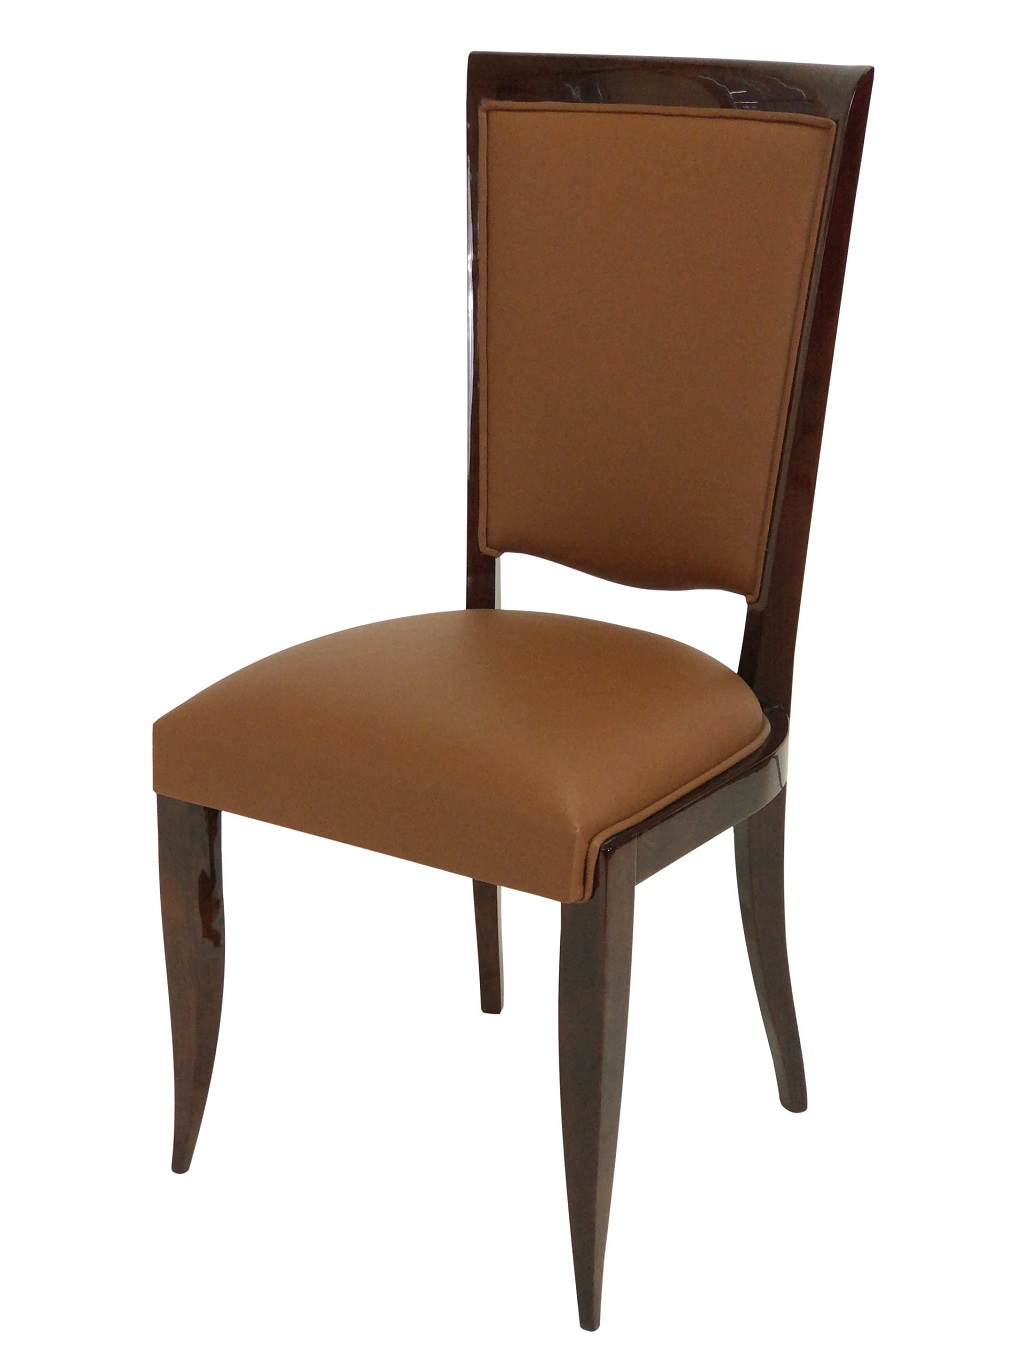 Art Deco chair side sidewise